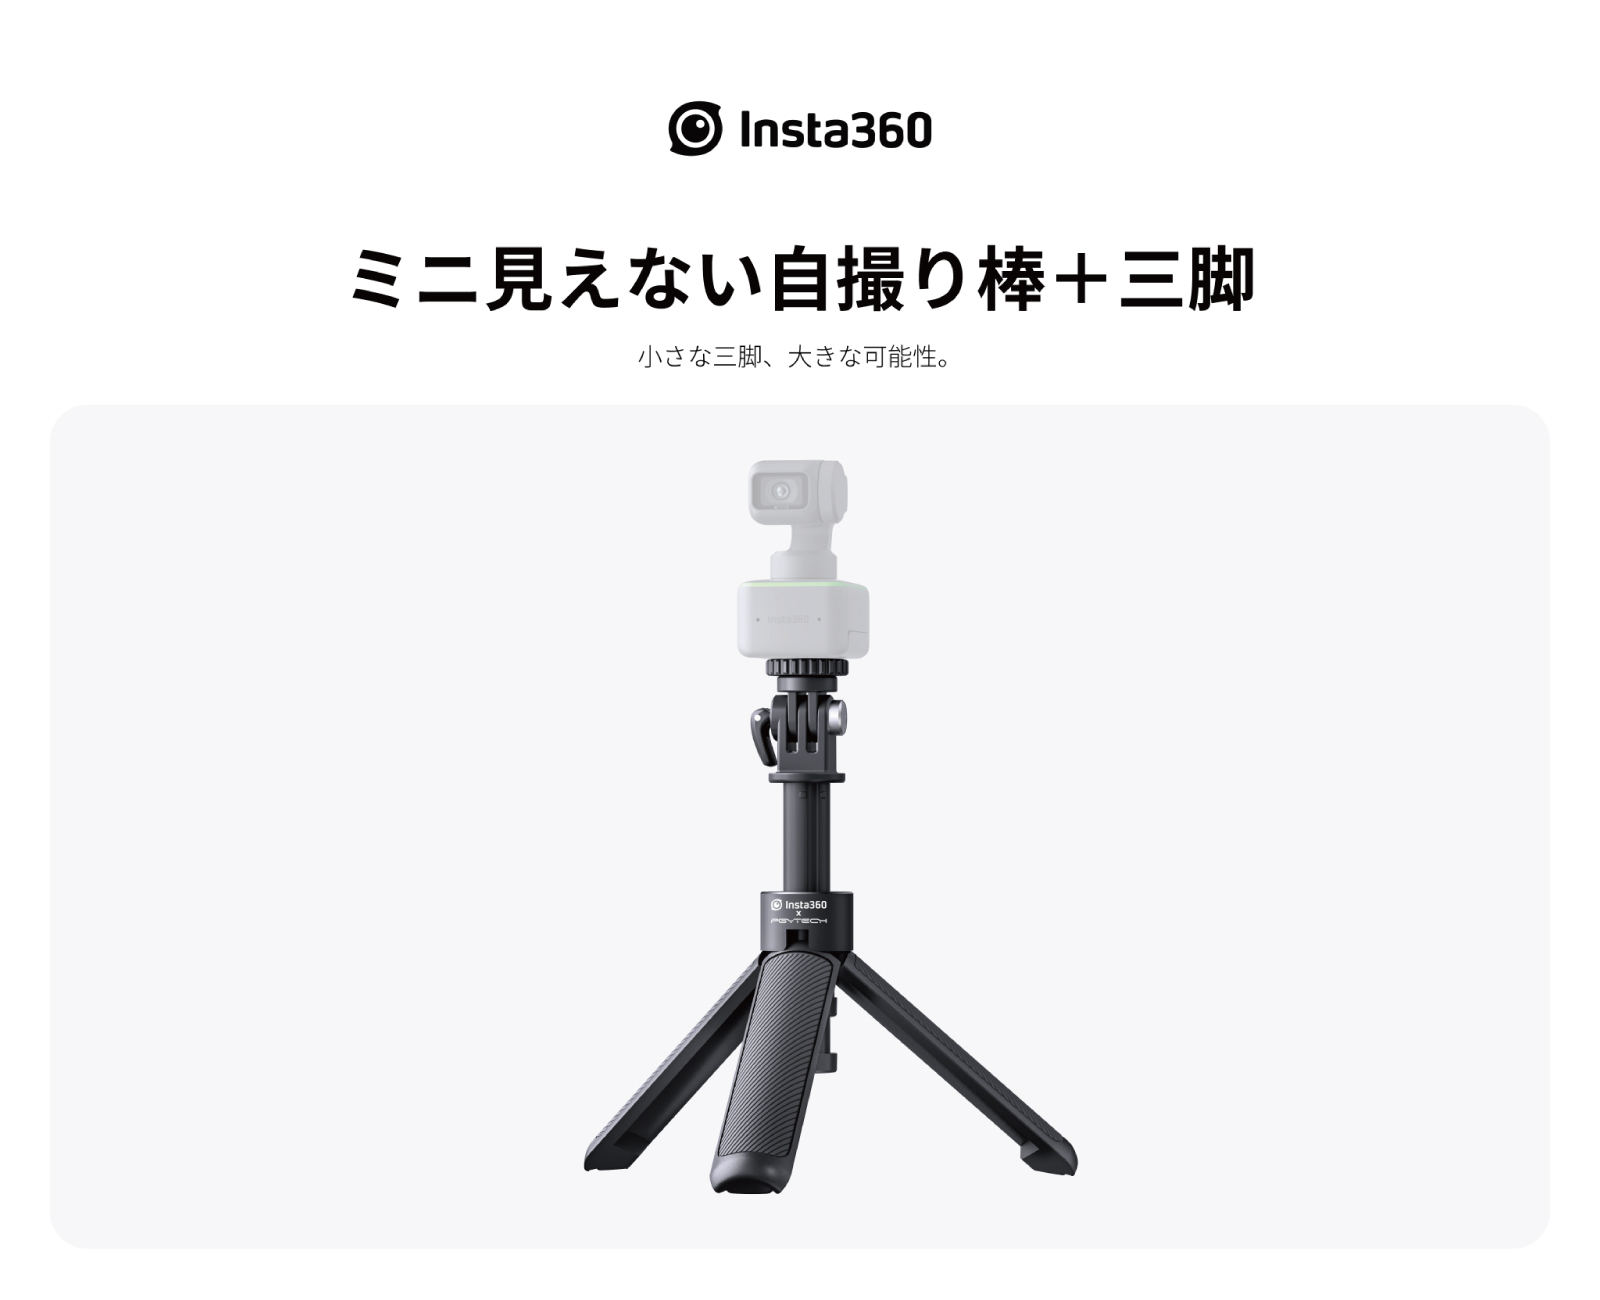 Insta360 Link / AI駆動 4K ウェブカメラ